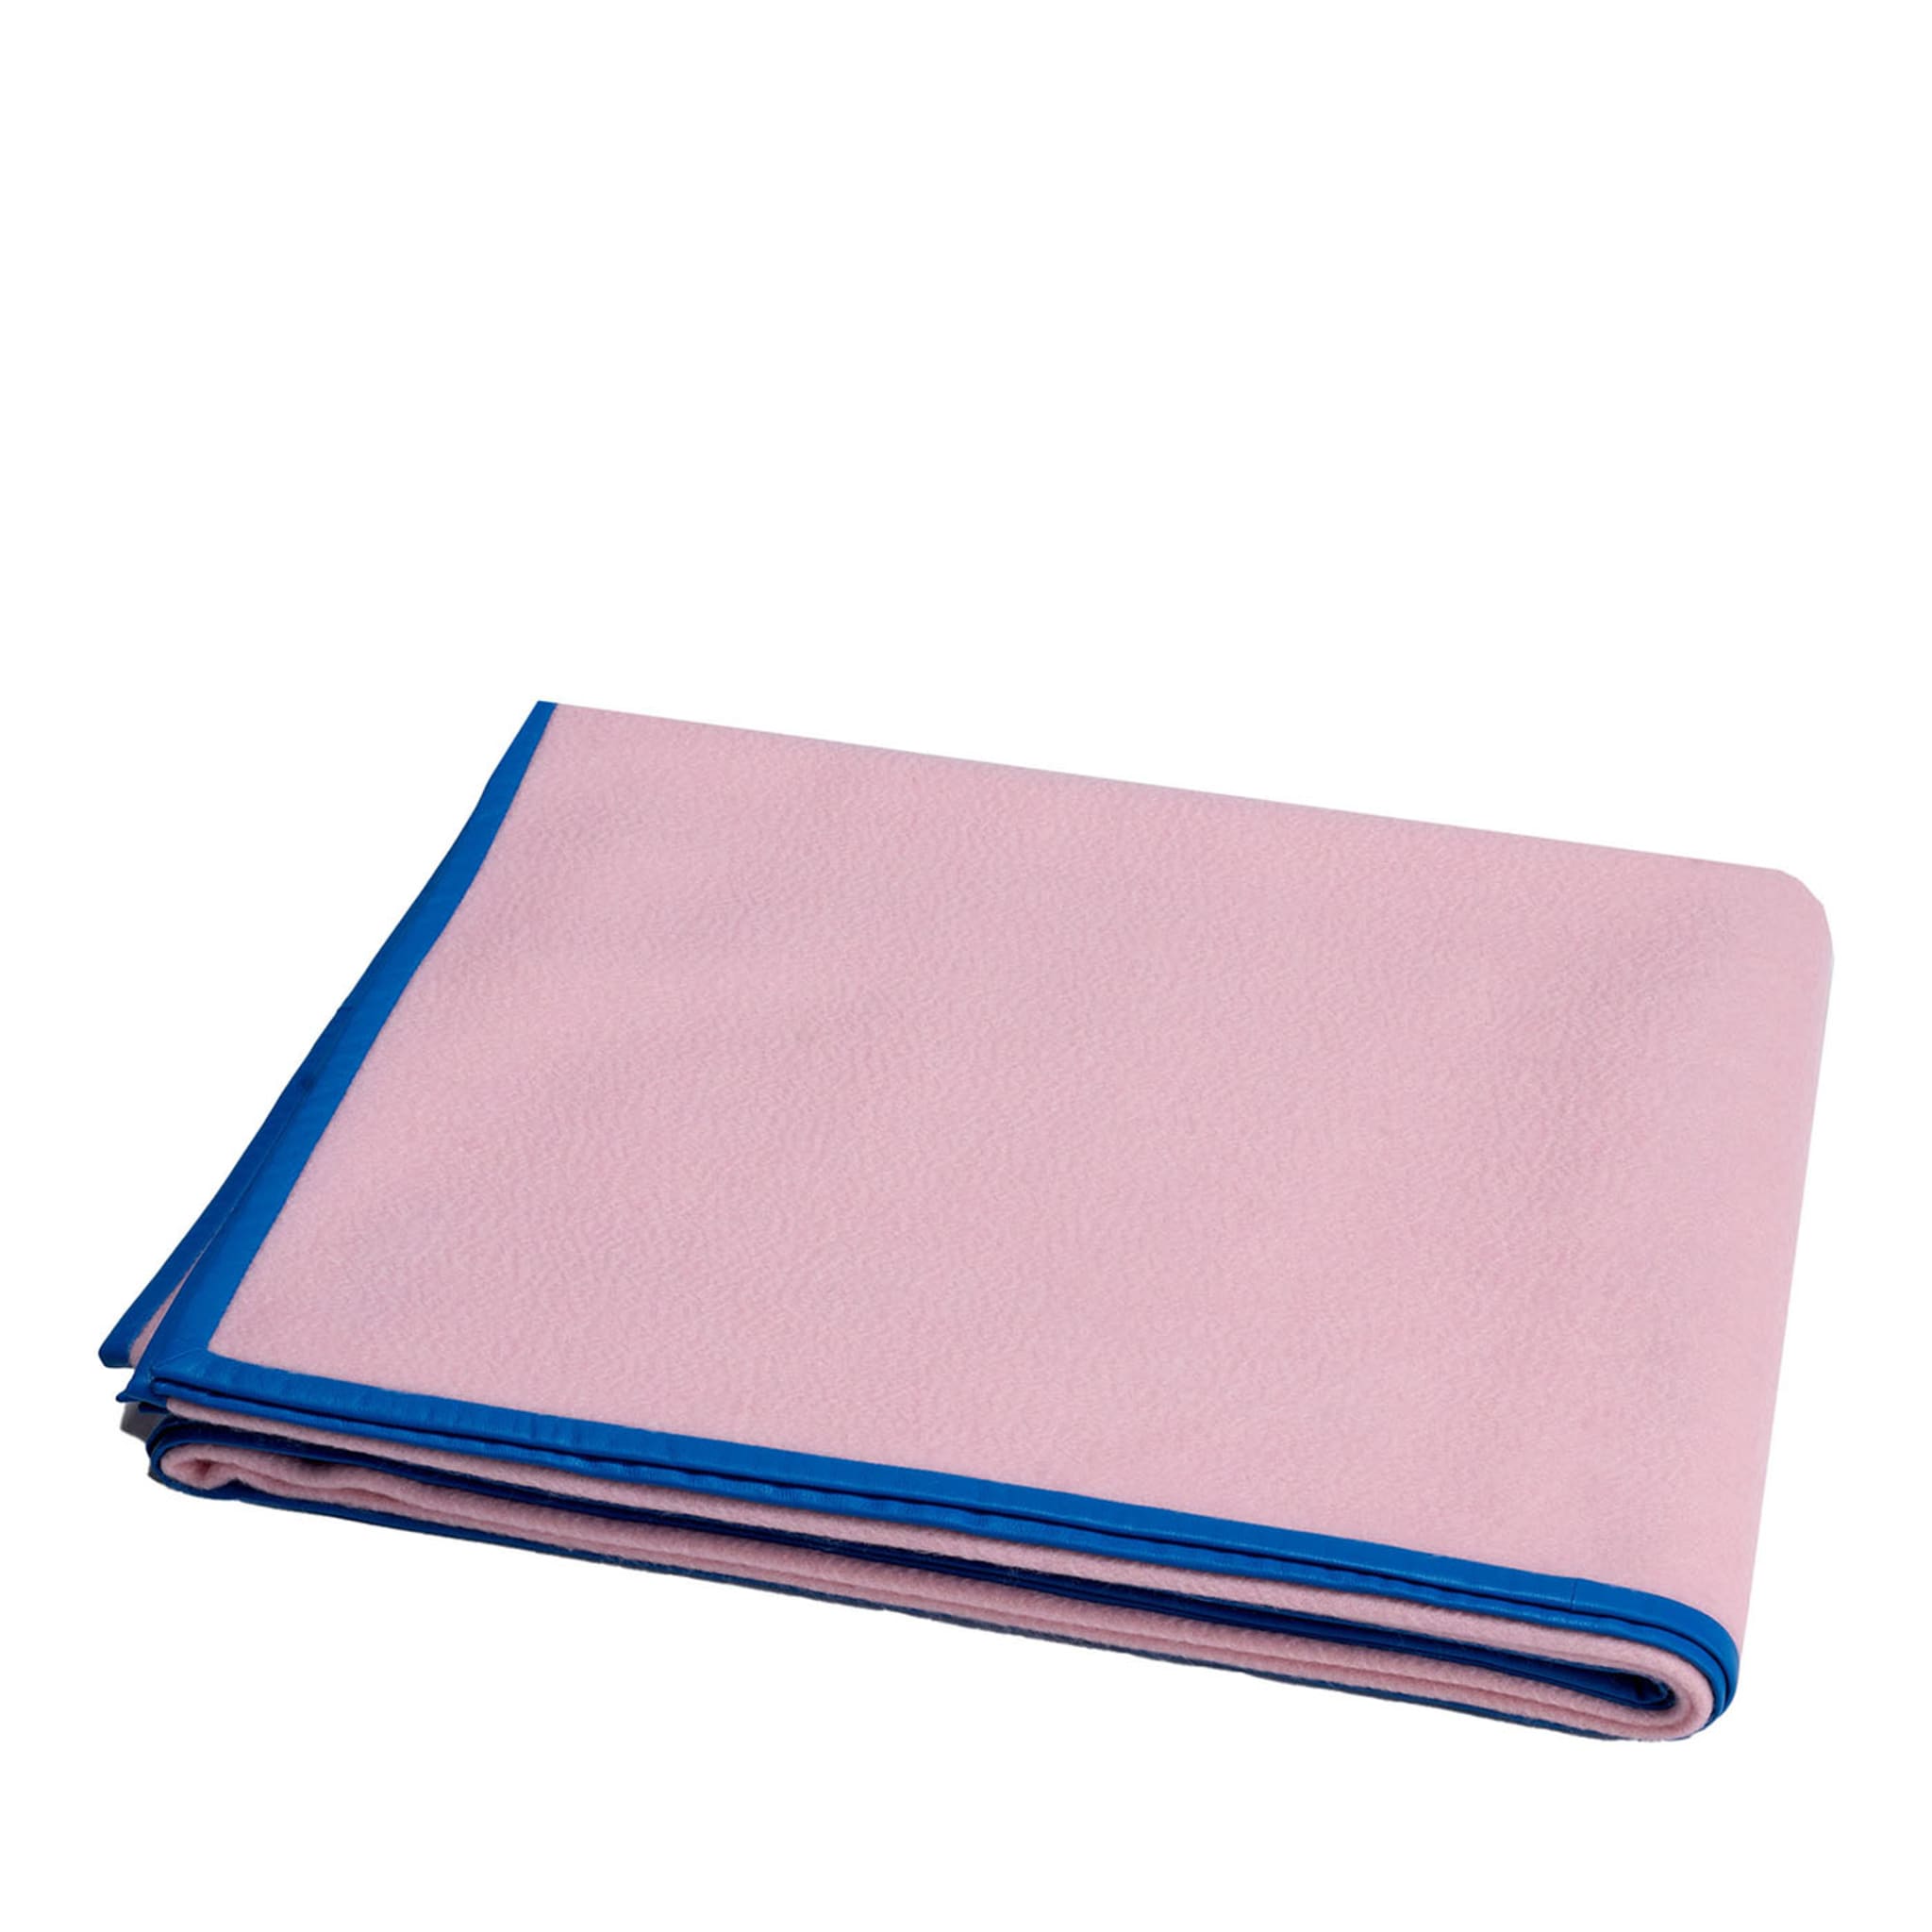 Coperta Biella in pelle blu e rosa - Vista principale